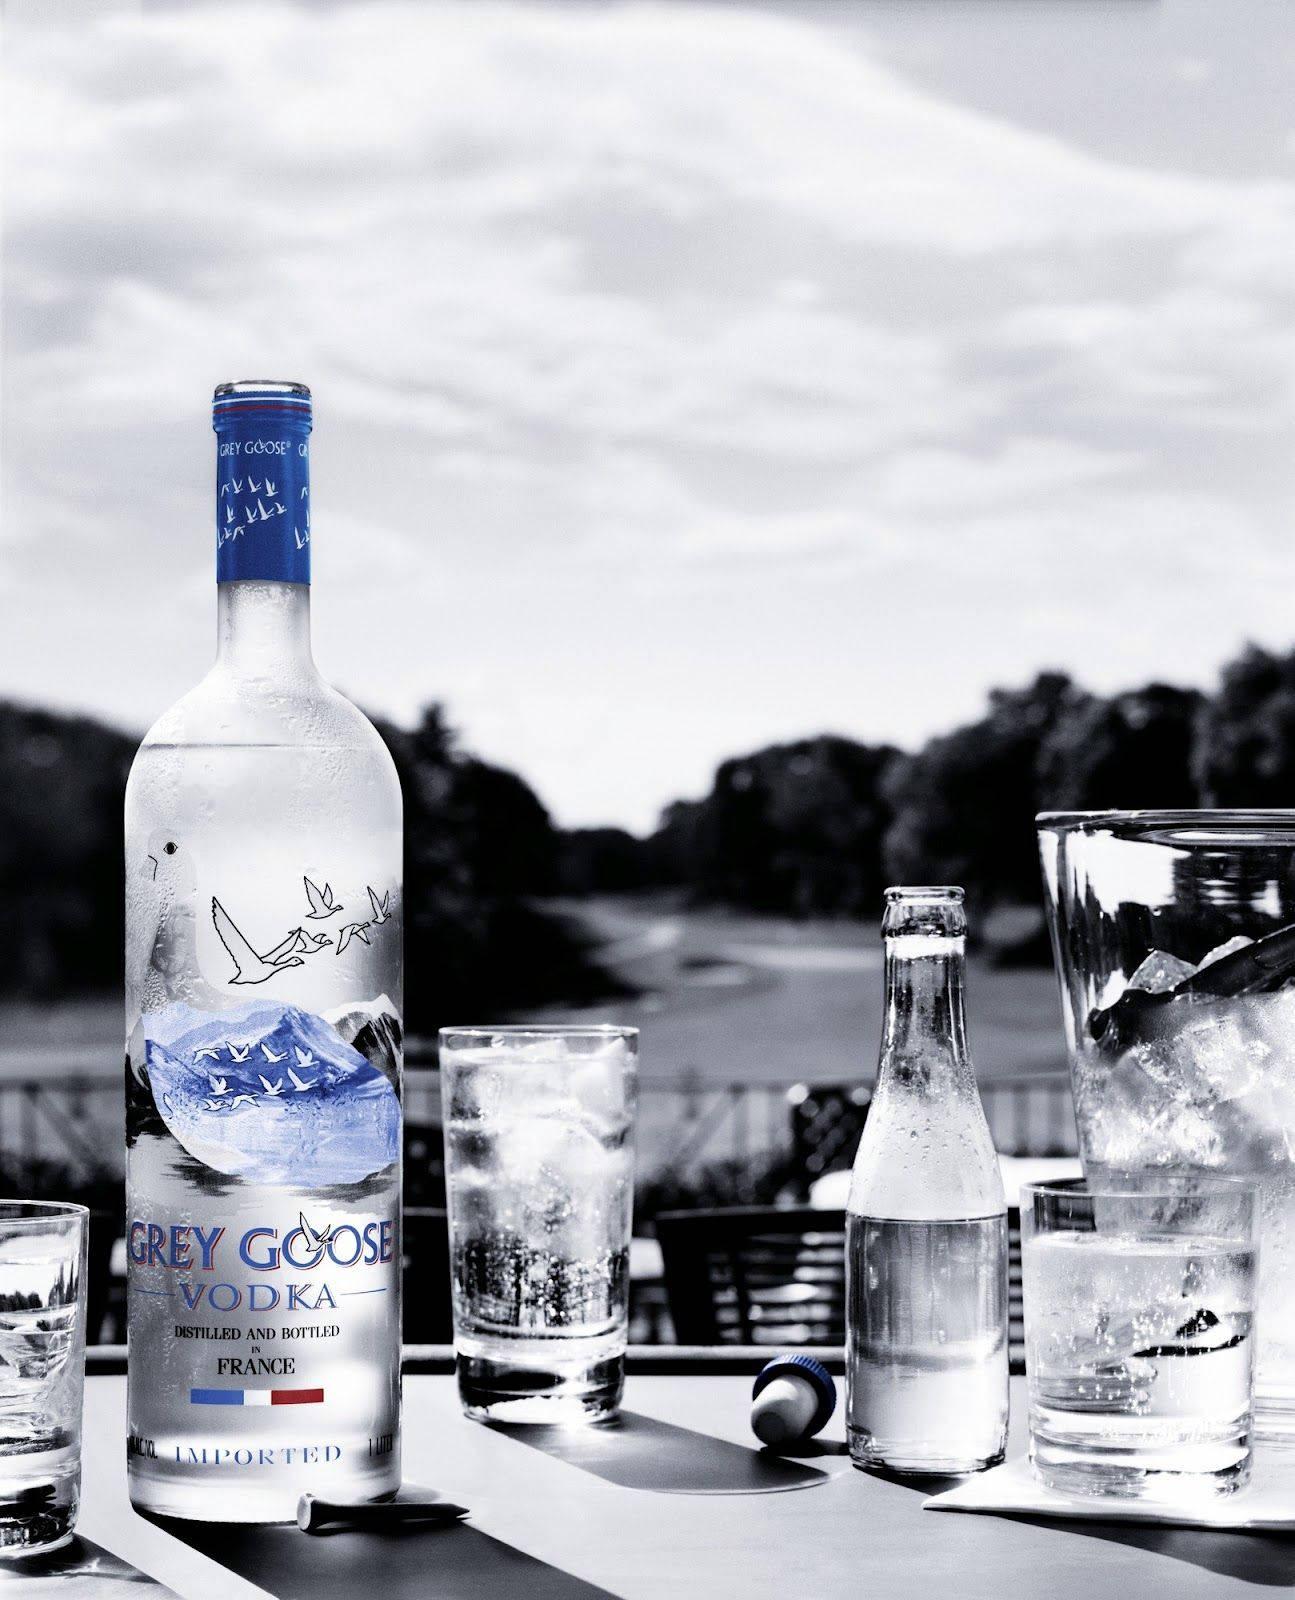 Premium French Alcohol Grey Goose Vodka Wallpaper